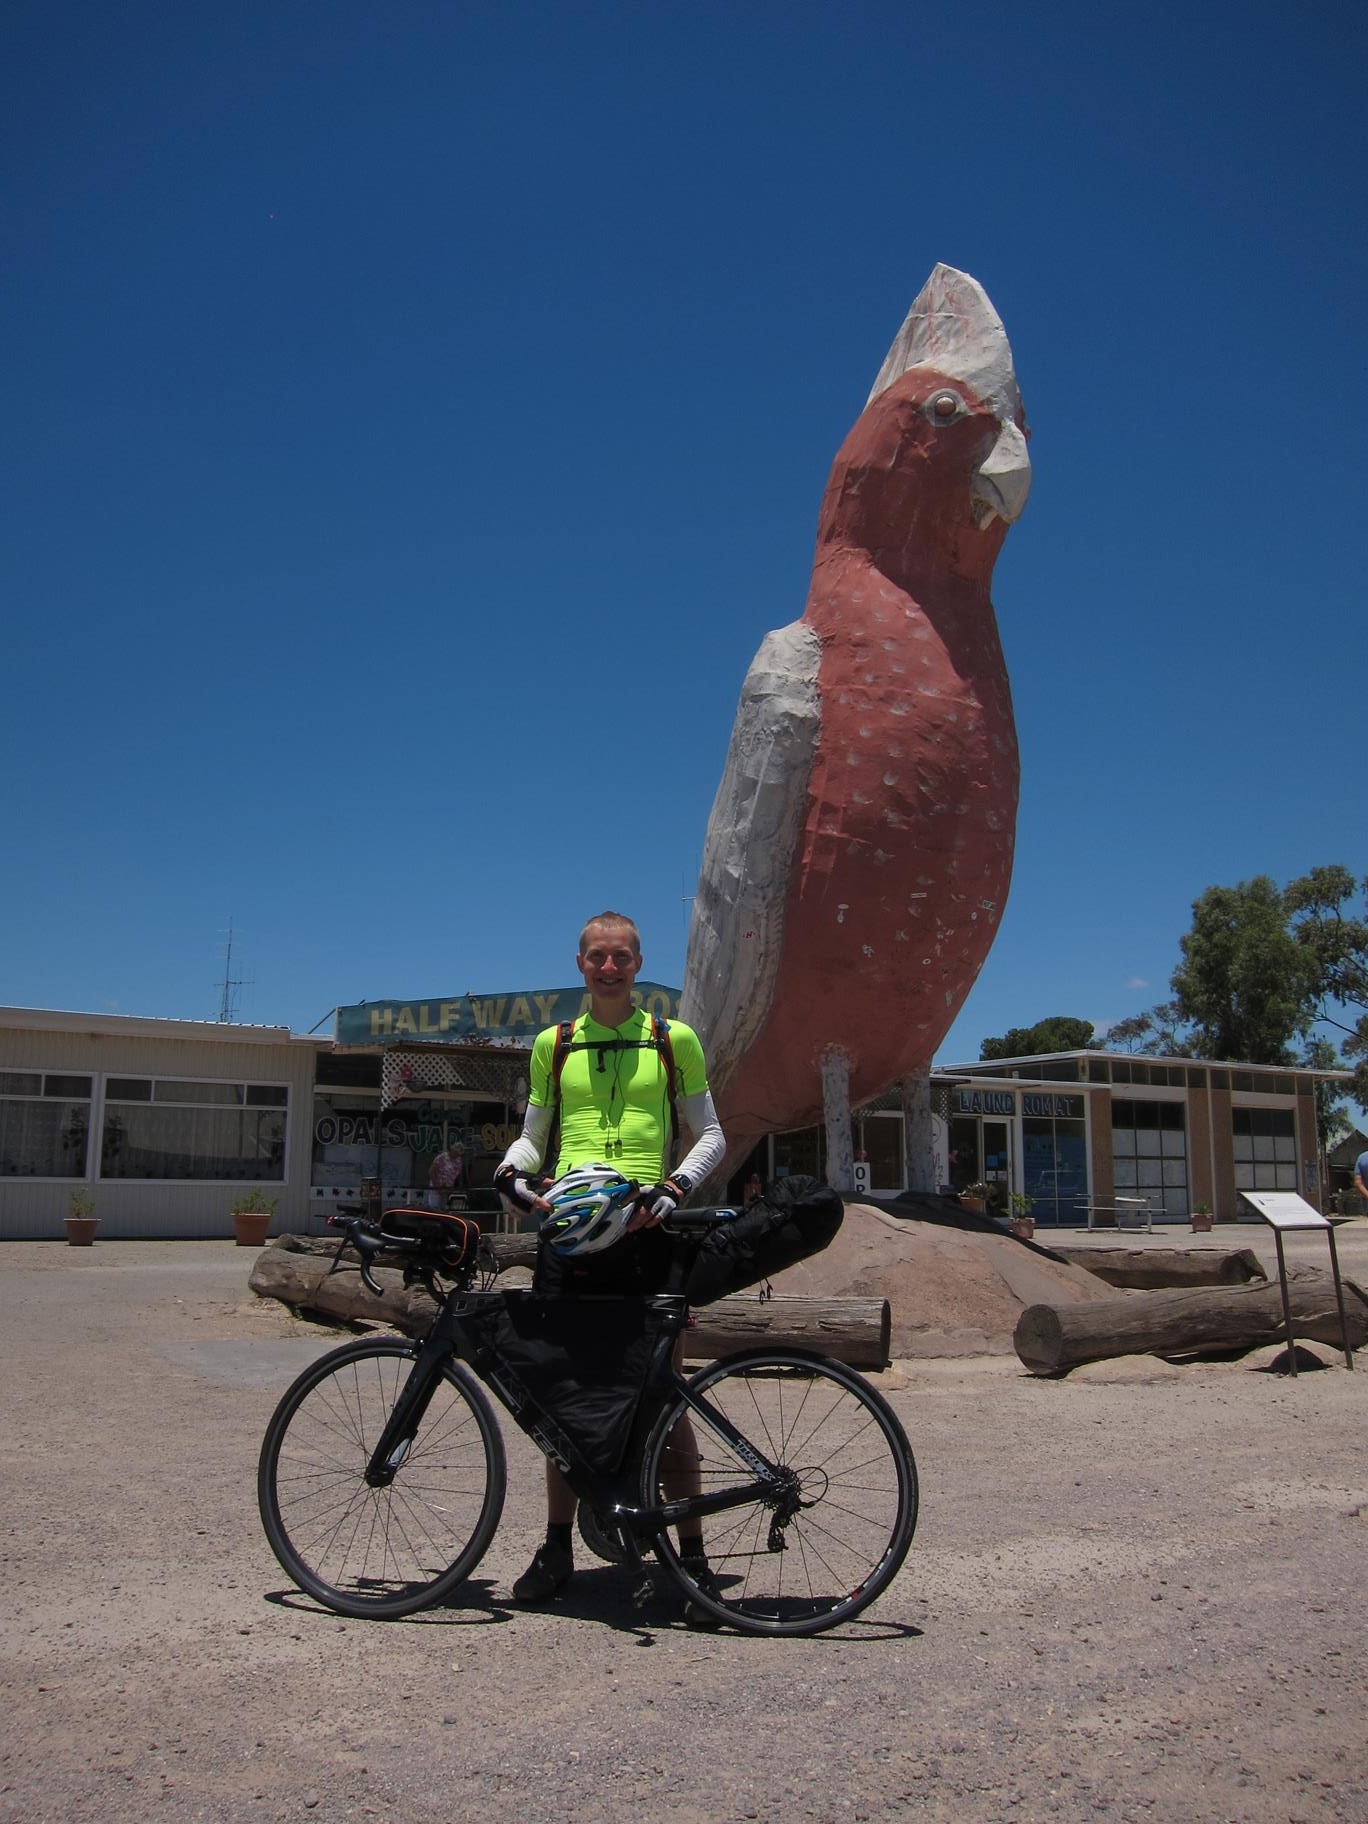 The 'Big Galah' in Kimba. Australians seem fond of building giant animals of papier-m�ch� near petrol stations.